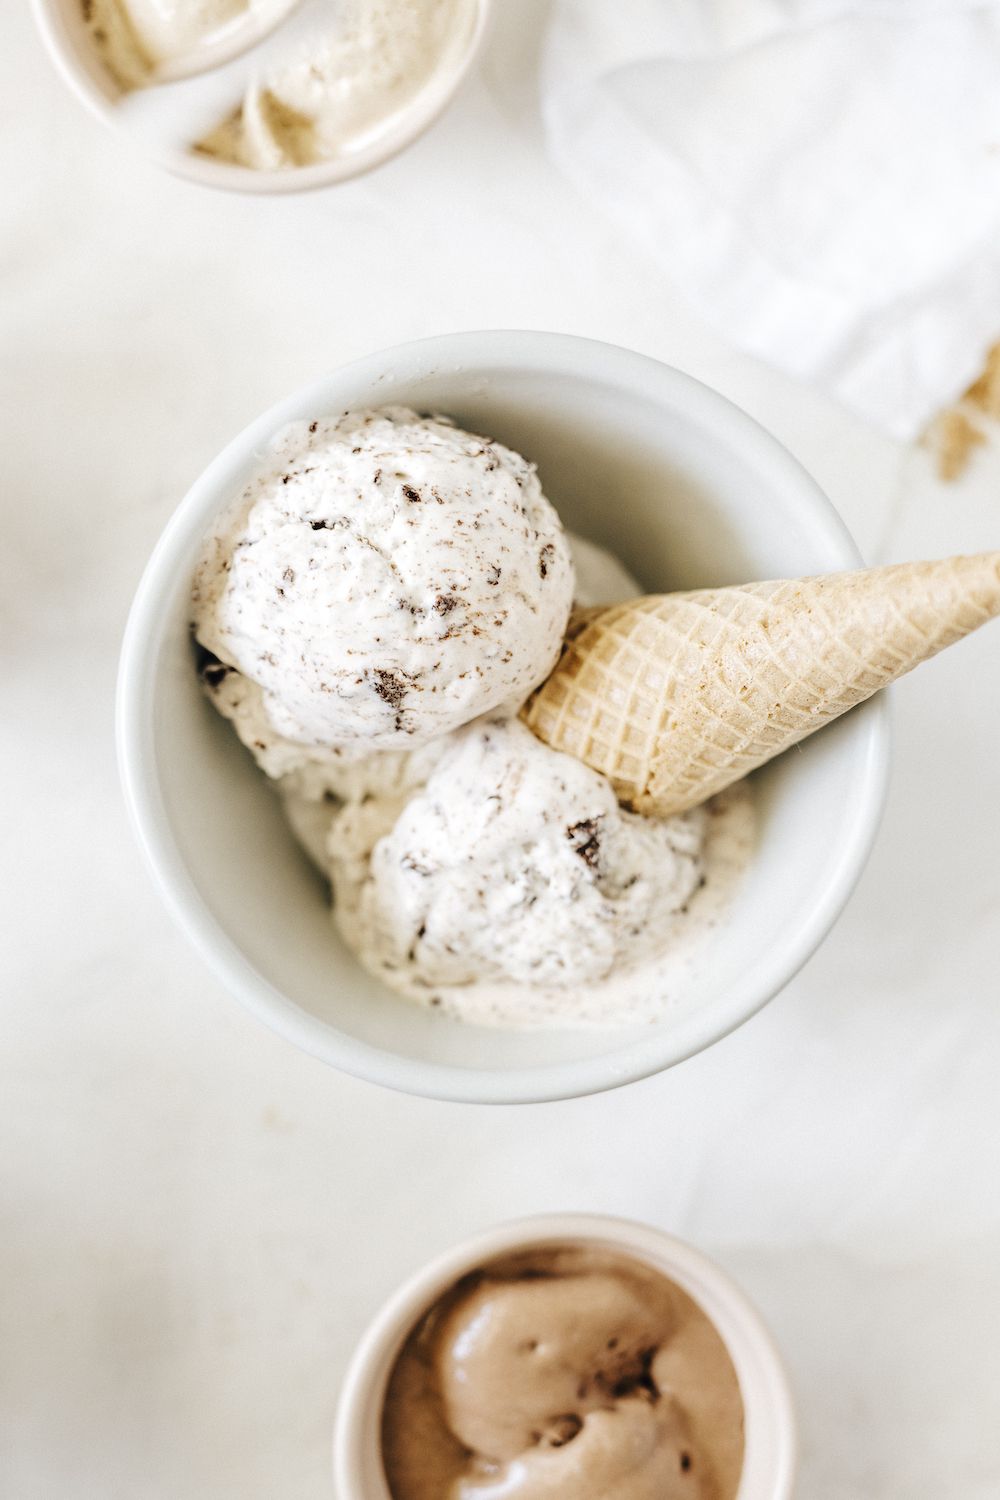 camille-styles-ice-cream-dairy-free-gluten-free-5462